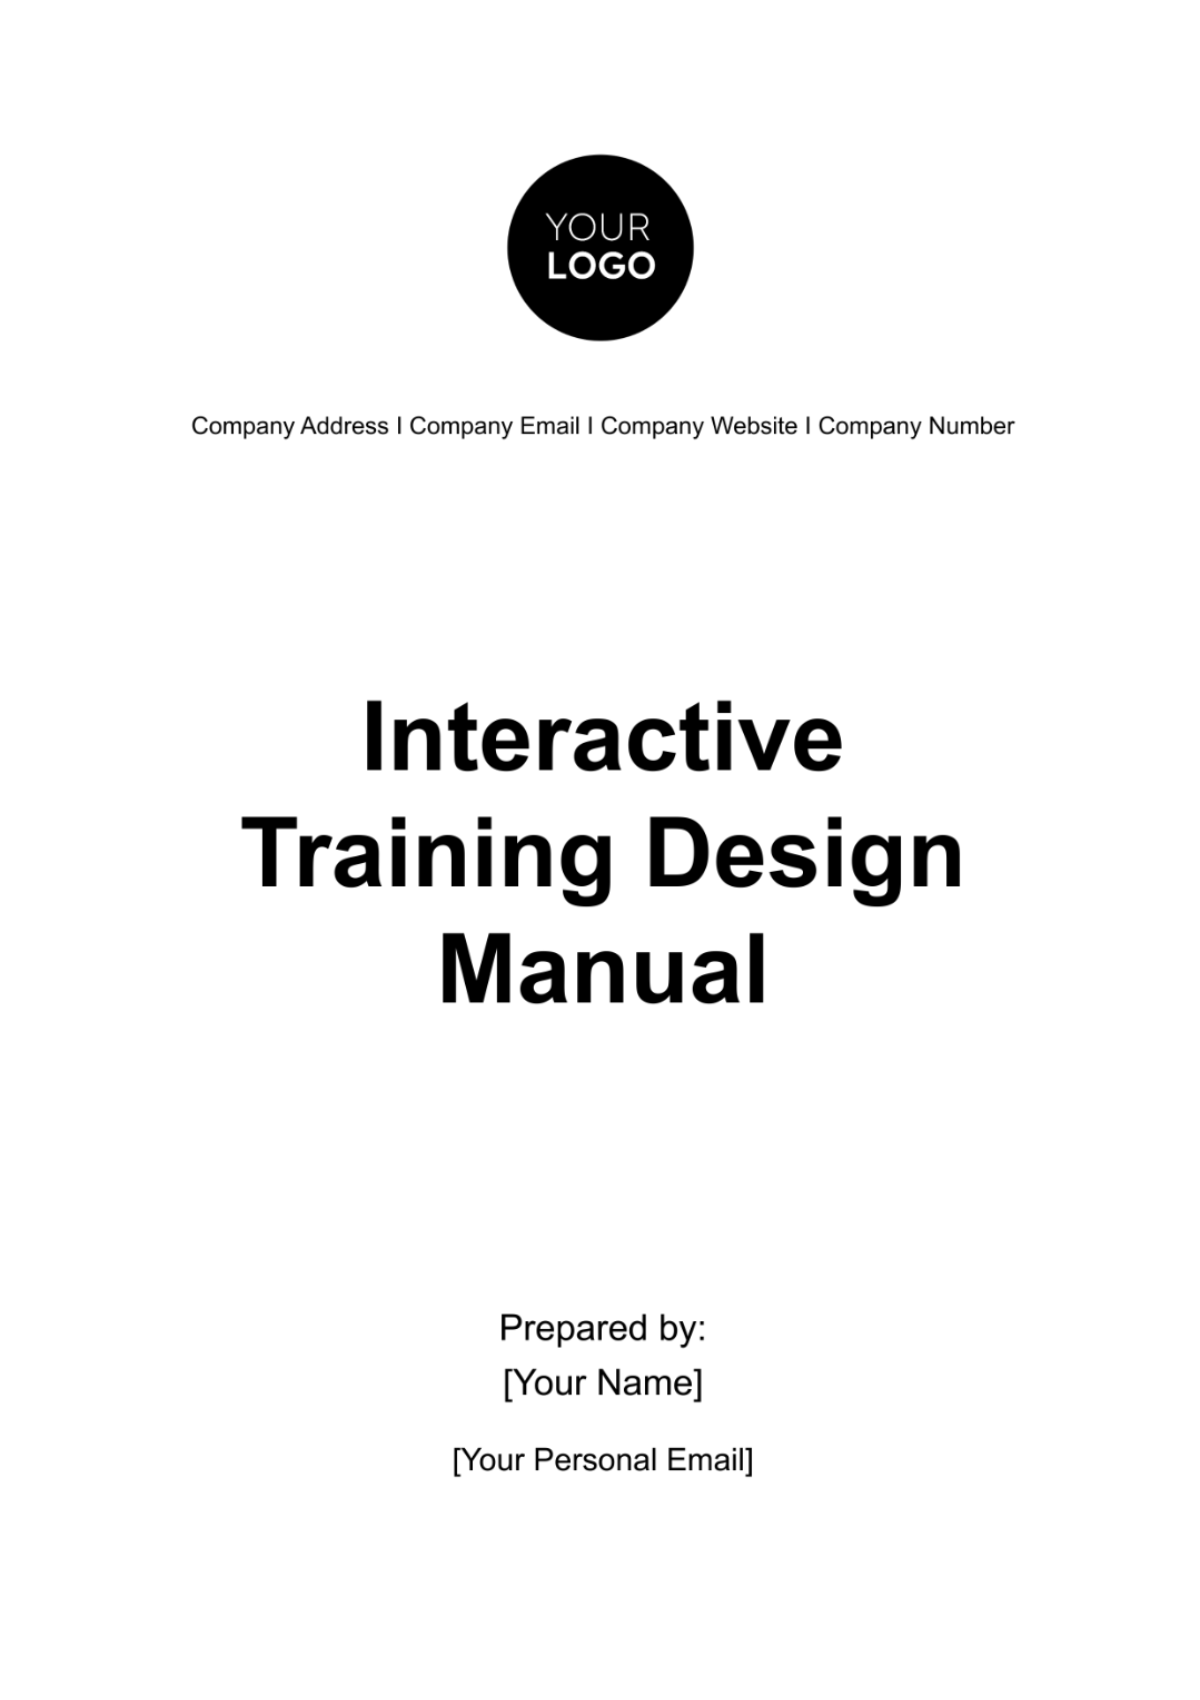 Interactive Training Design Manual HR Template